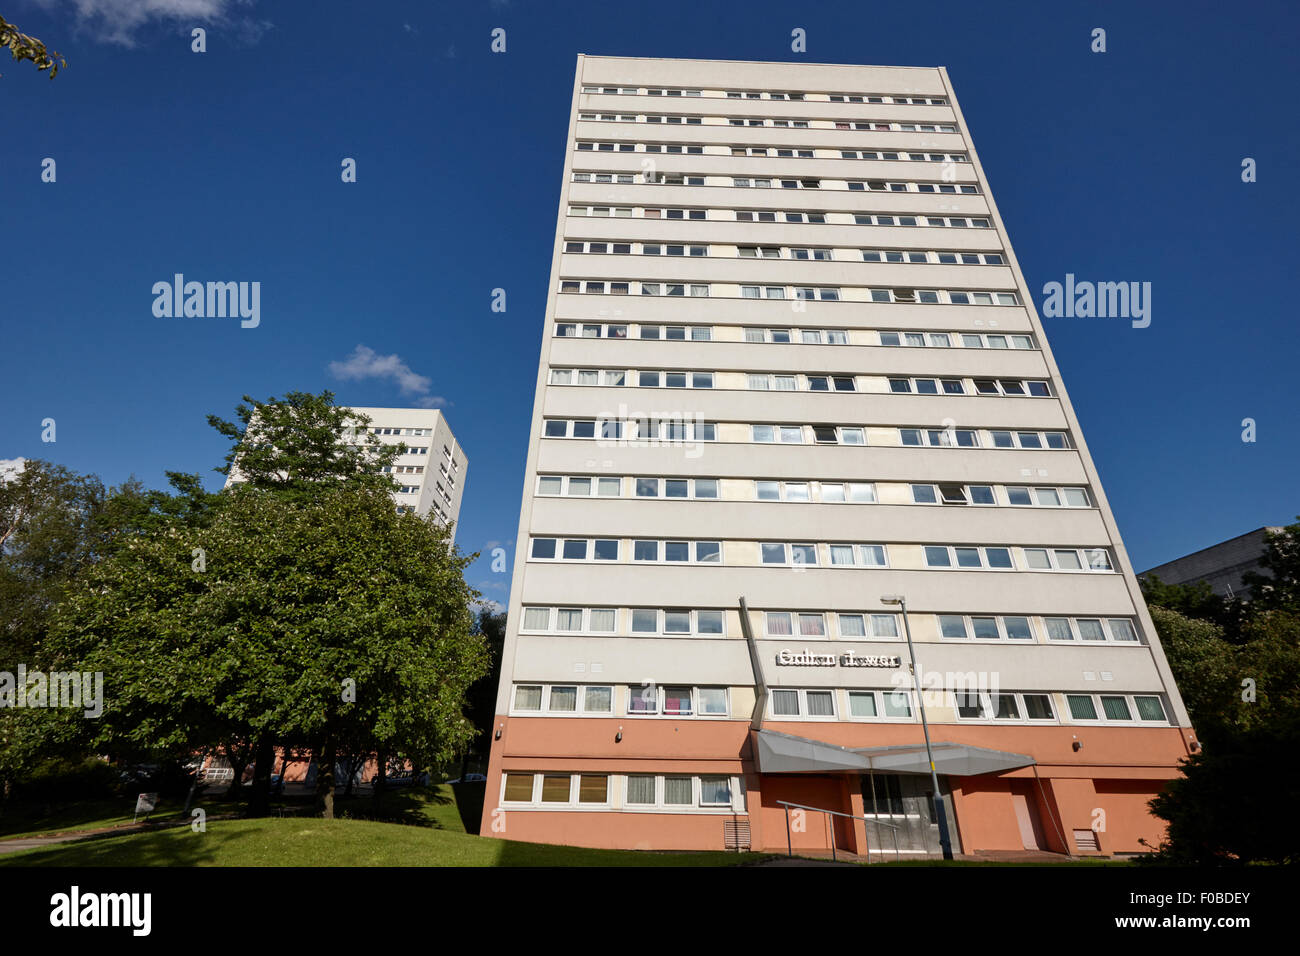 galton tower Birmingham civic gardens council tower block estate UK Stock Photo